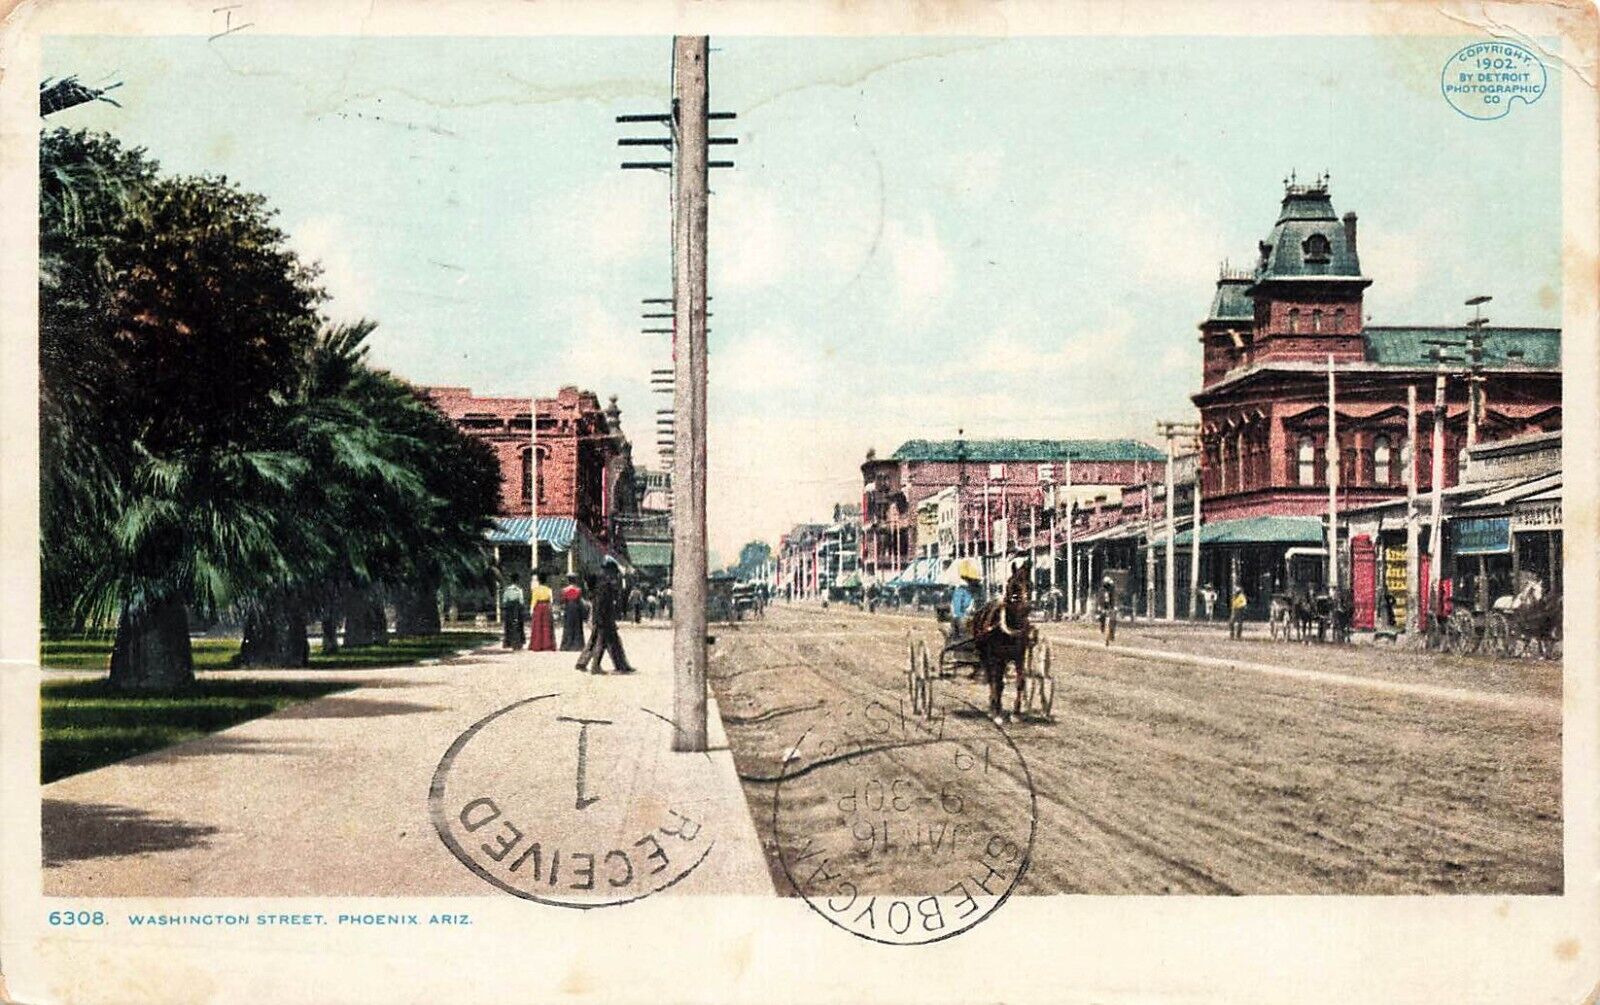 1908 ARIZONA POSTCARD: STREET SCENE OF WASHINGTON STREET, PHOENIX, AZ